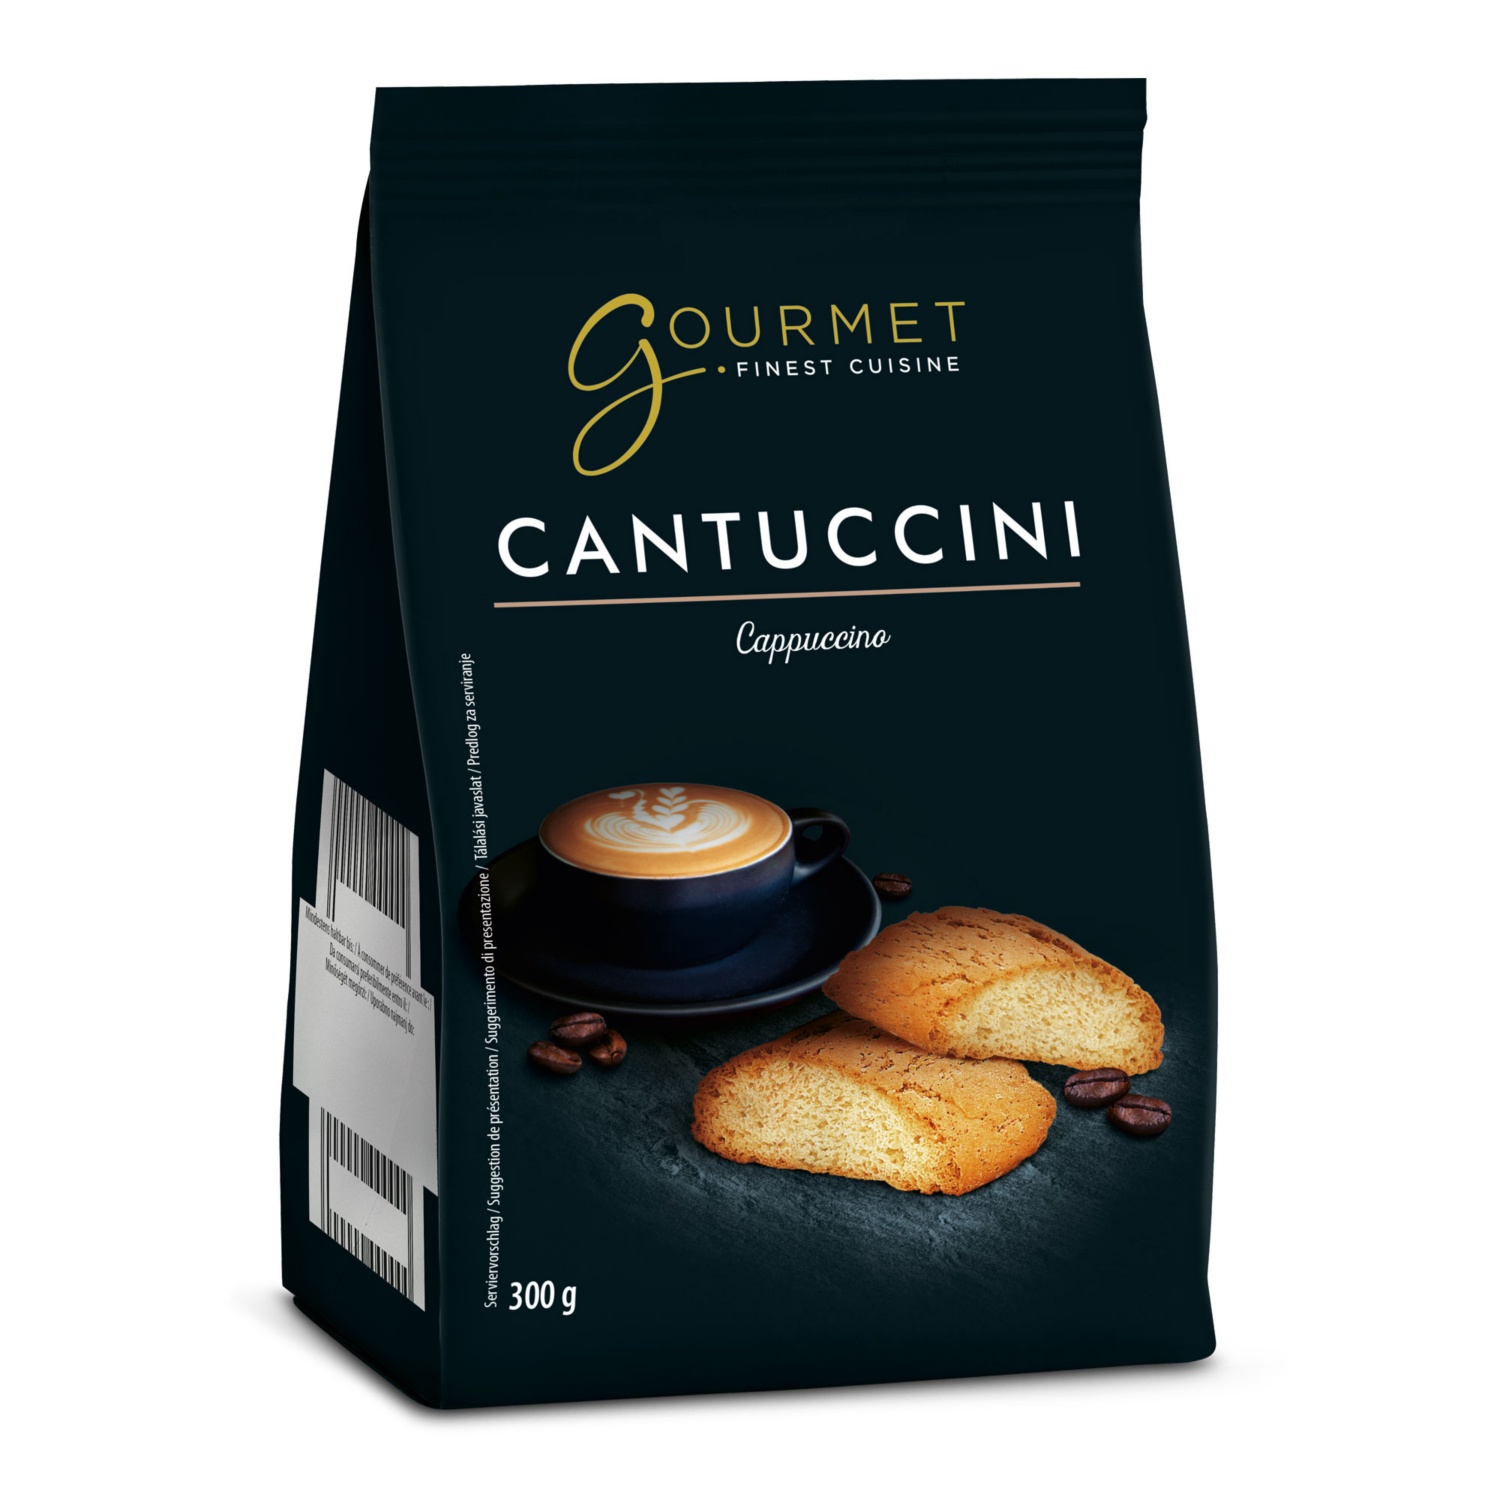 GOURMET Cantuccini, Cappuccino